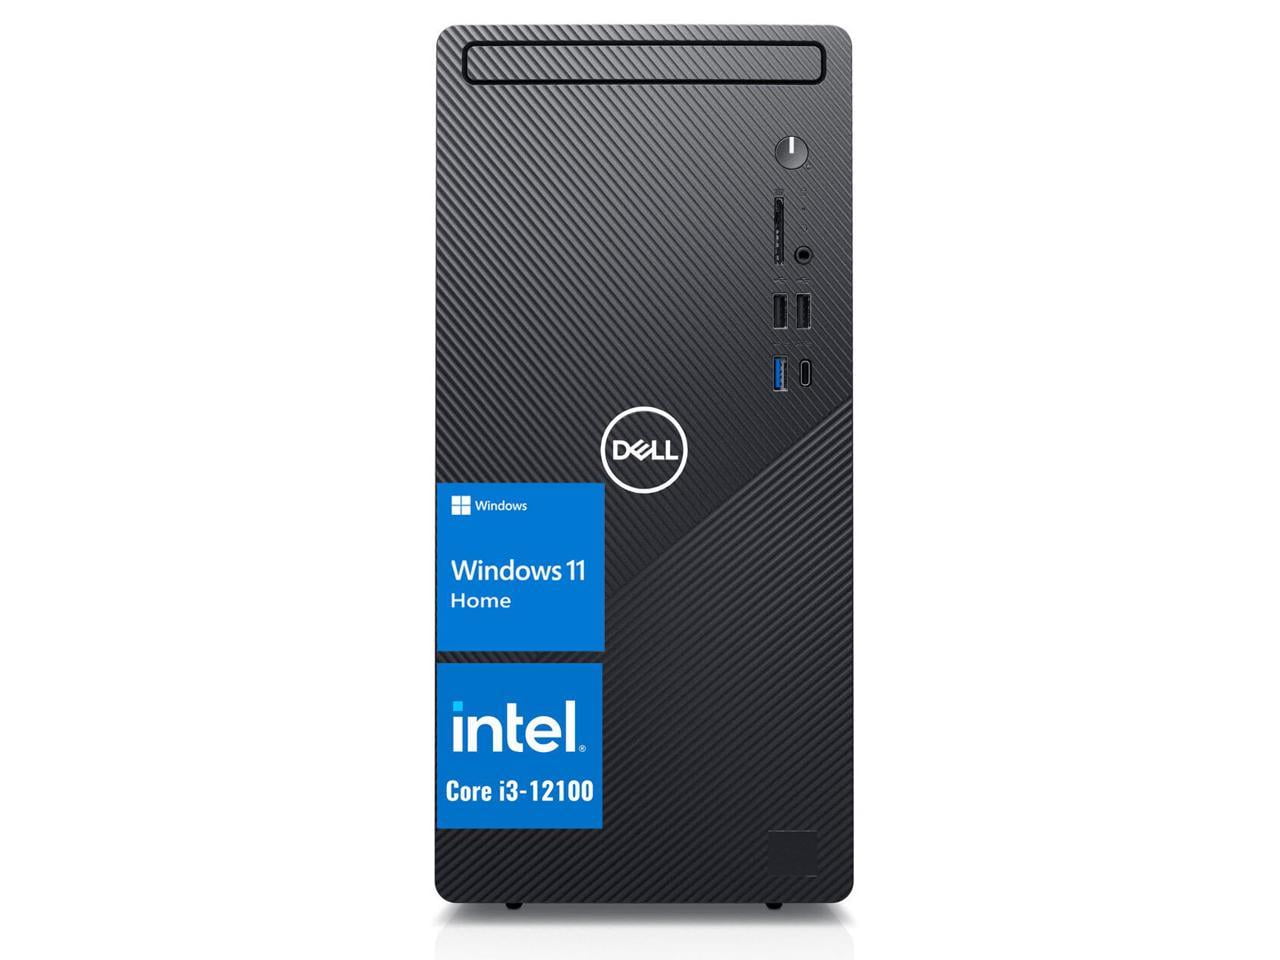 Dell Inspiron Desktop Computer PC, 12th Gen Intel Core i3-12100